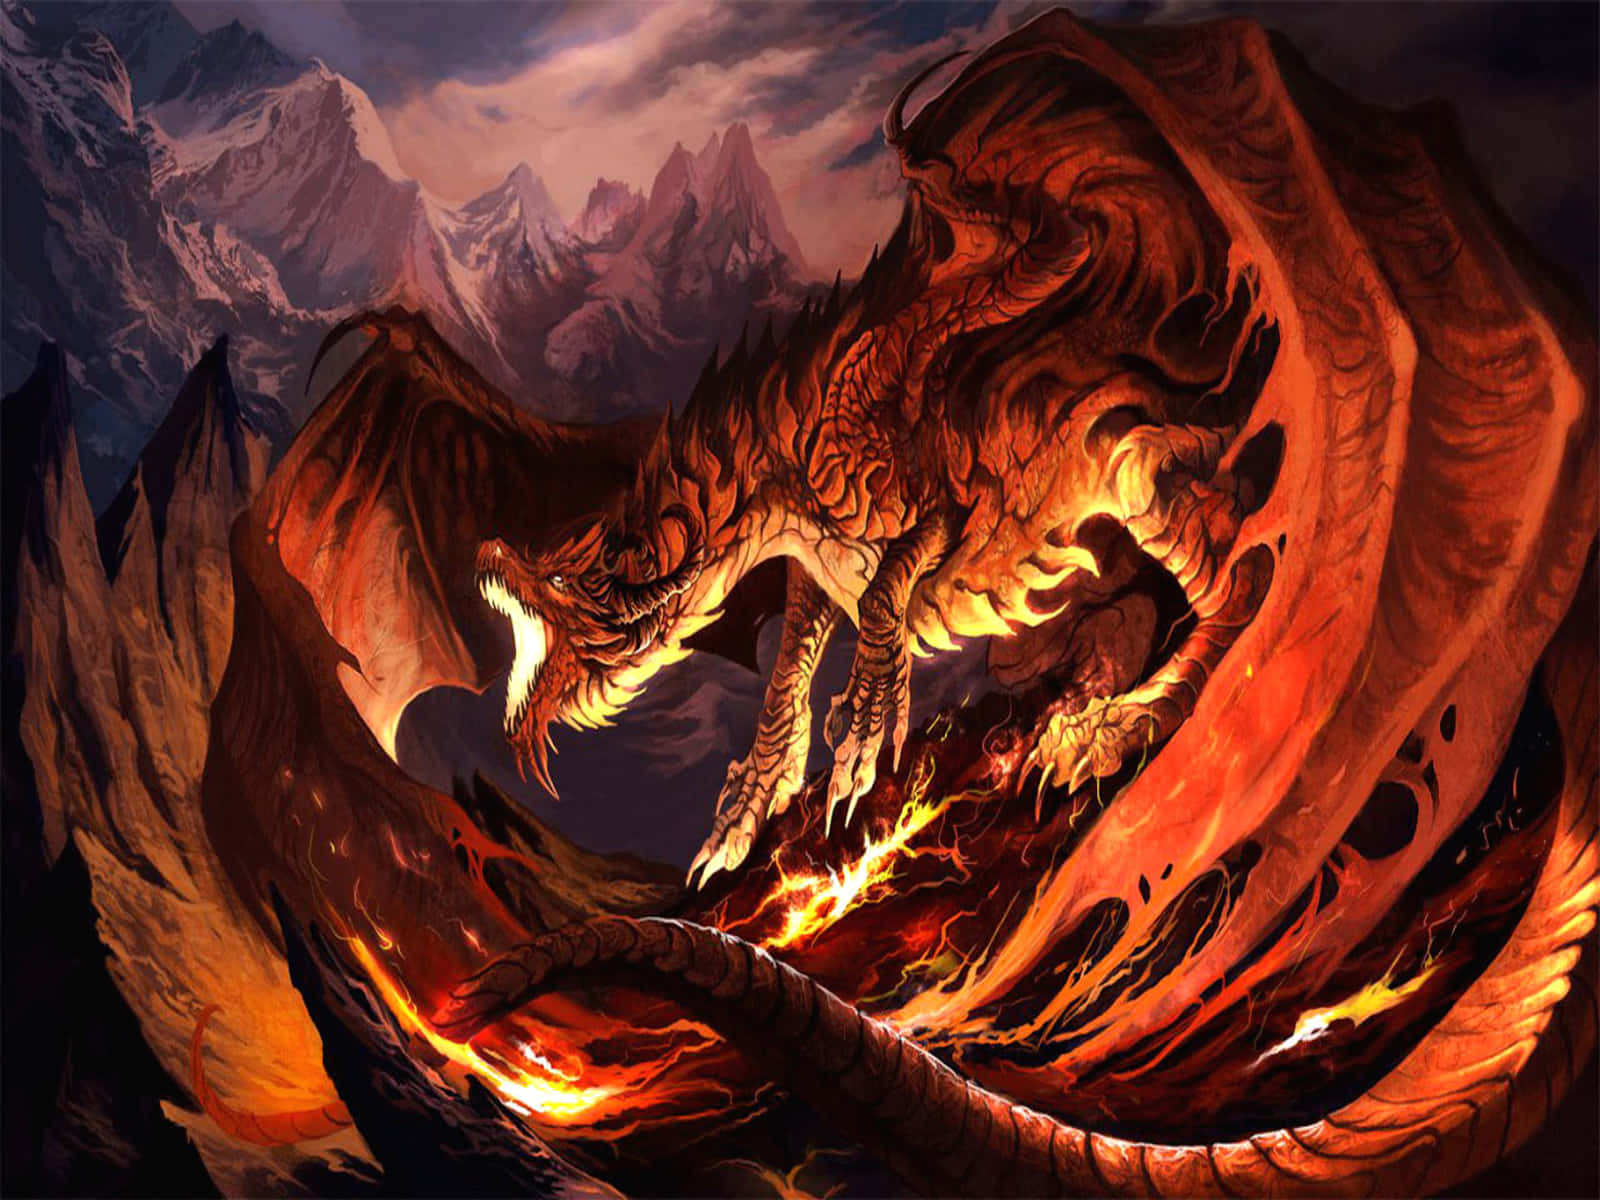 Epic Dragon Wallpaper 73 images